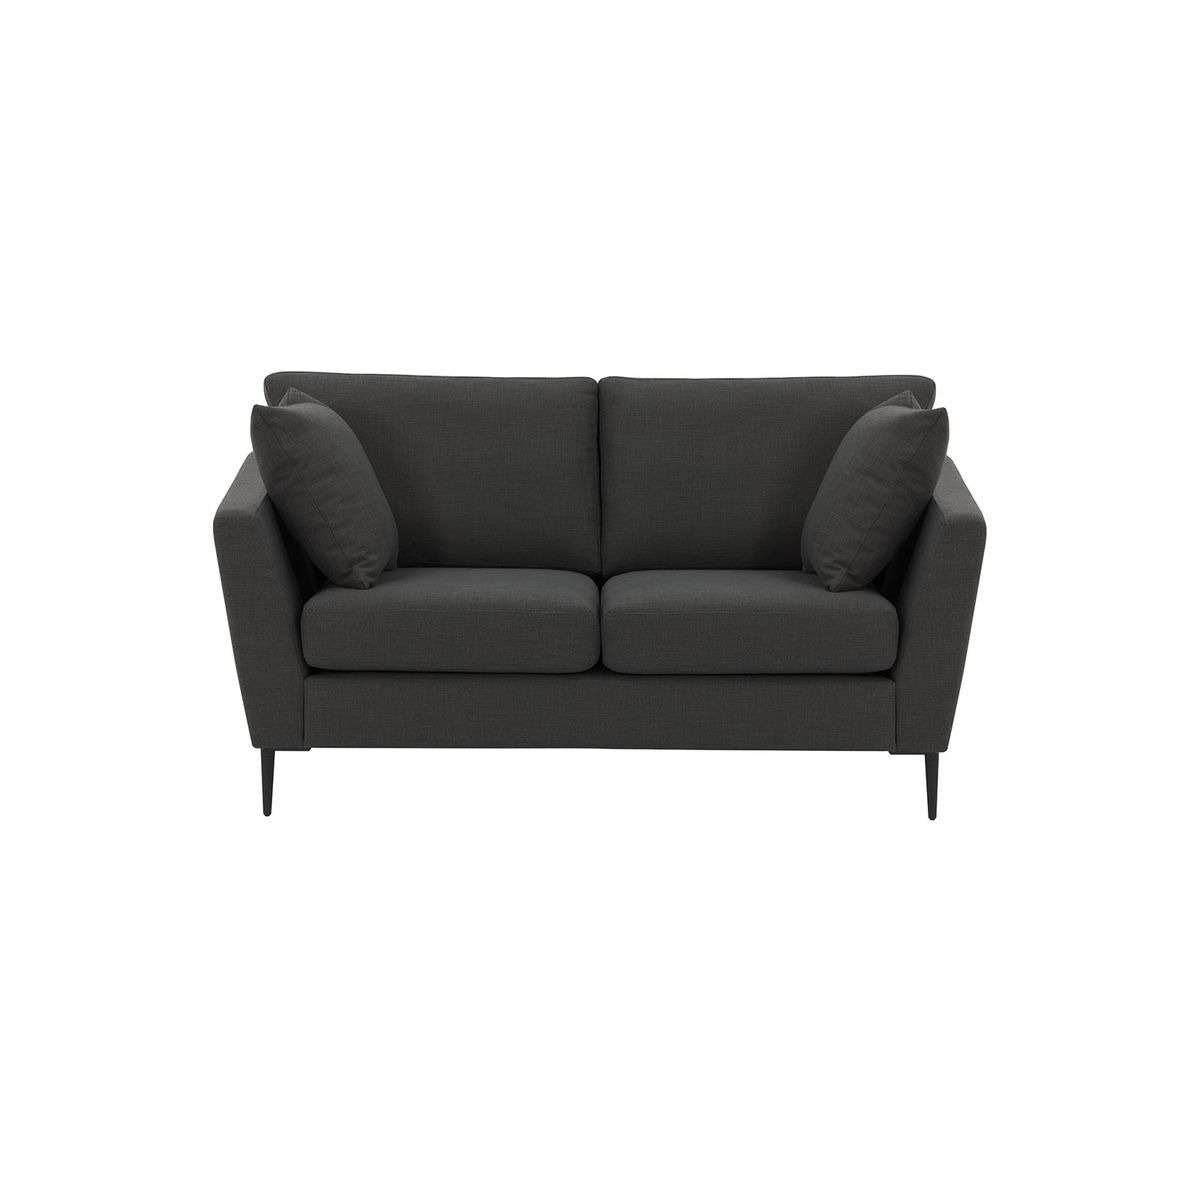 Imani 2 Seater Sofa, dark grey - image 1